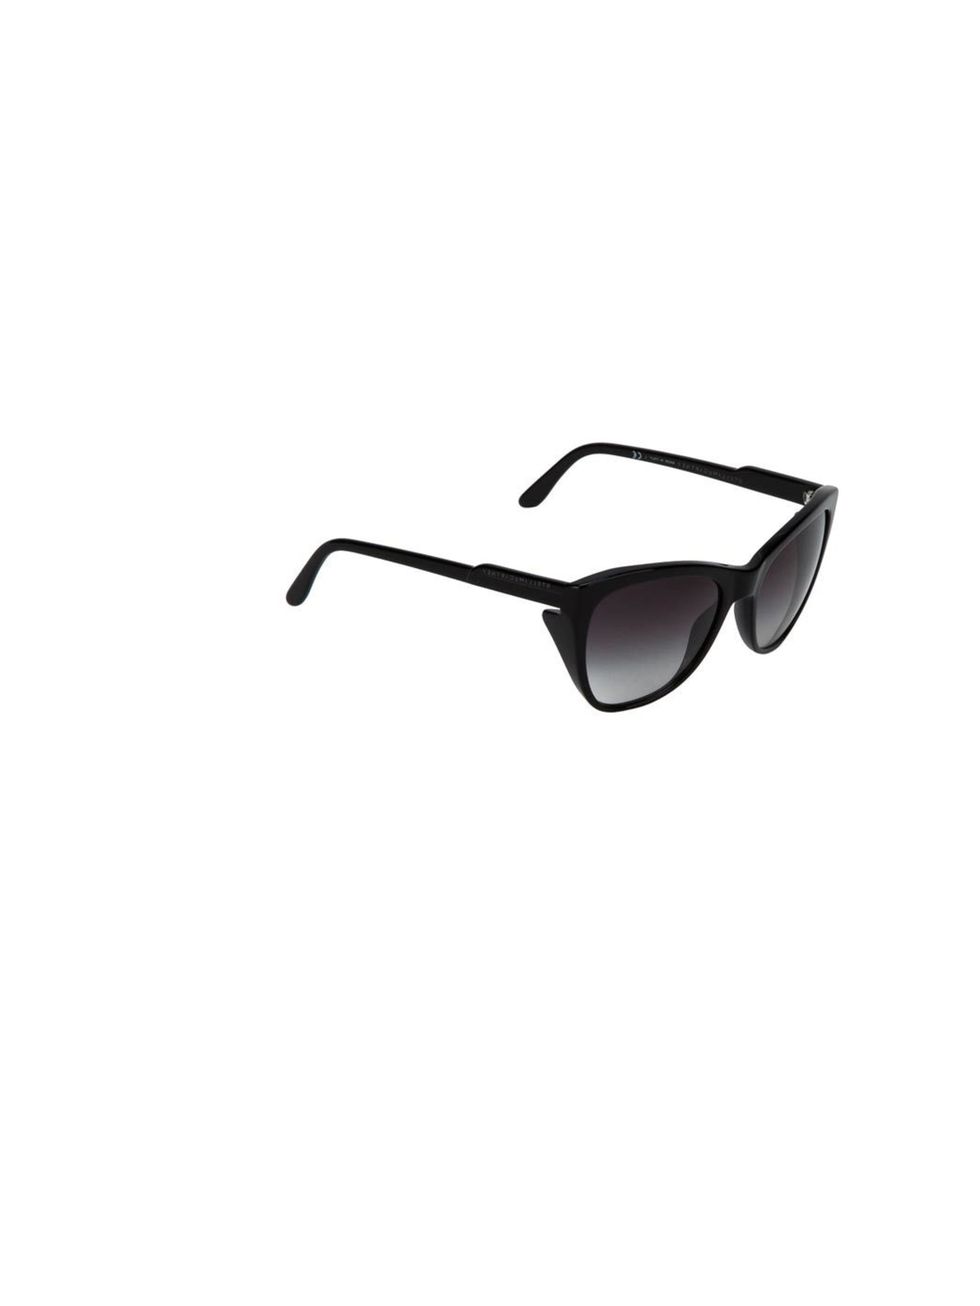 <p>Stella McCartney sunglasses, £149, at <a href="http://www.farfetch.com/shopping/women/stella-mccartney-sunglasses-item-10221273.aspx">Farfetch.com</a></p>